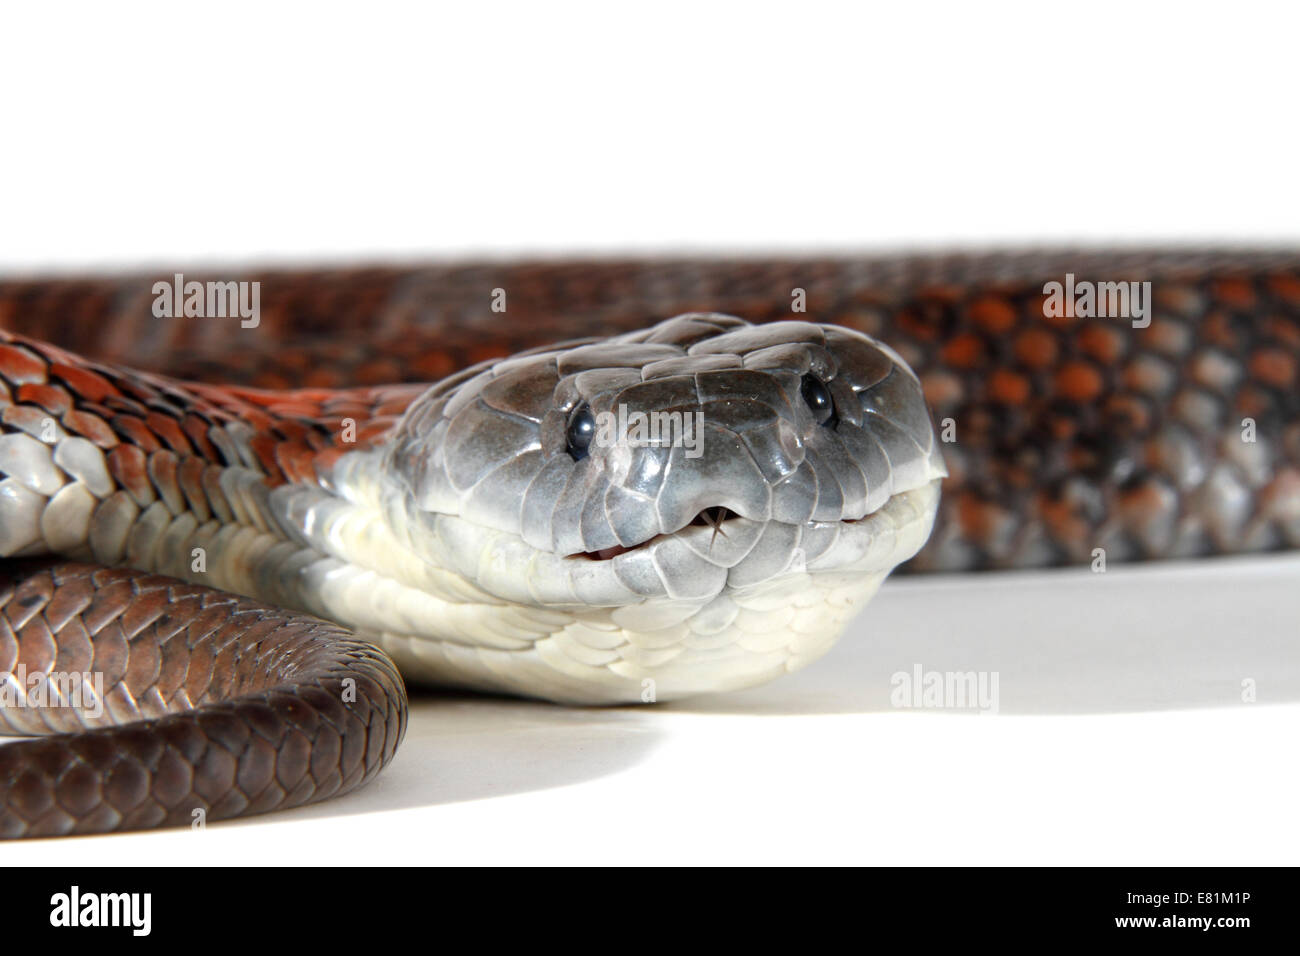 Tiger Snake (Notechis scutatus) Stock Photo